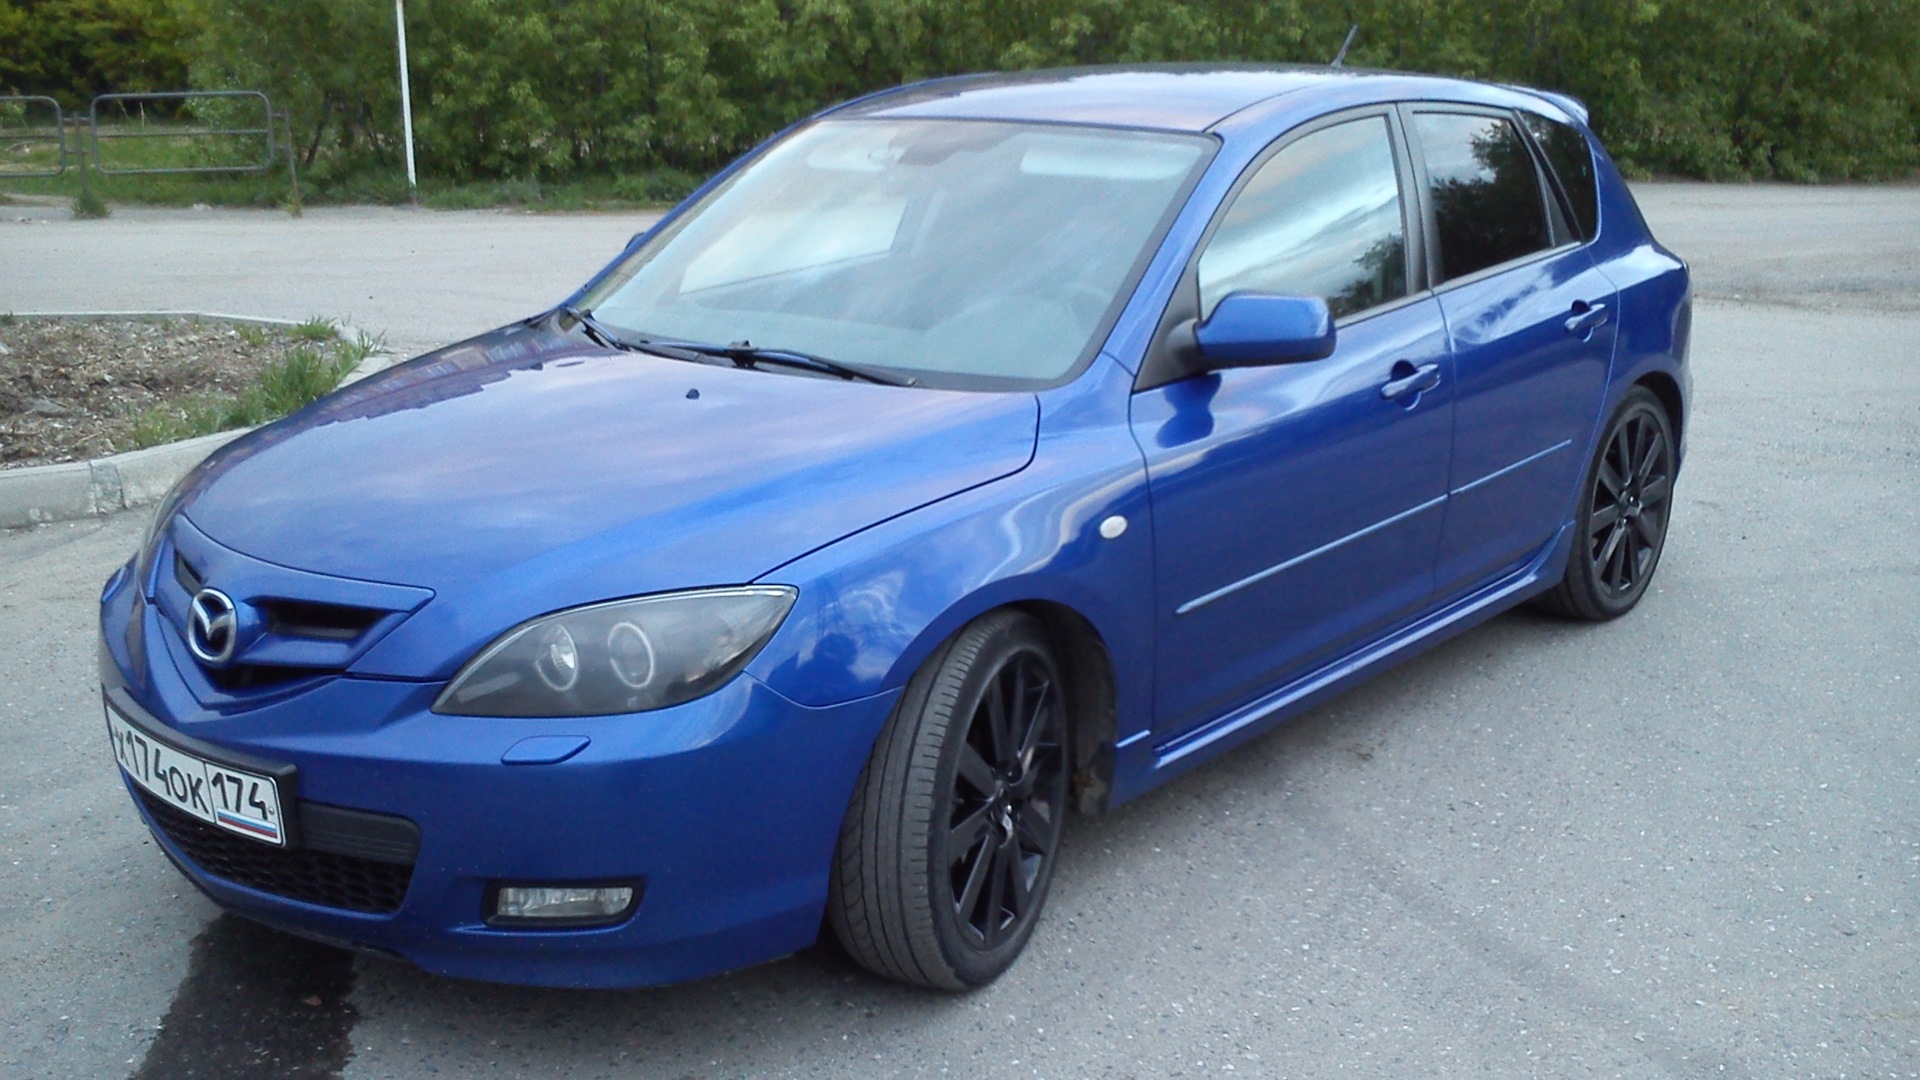 Mazda 3 drive2. Мазда 3 голубая хэтчбек 2007. Мазда 3 Персей. Синяя Мазда 3 БК седан. Мазда 3 2008 цвет электро.